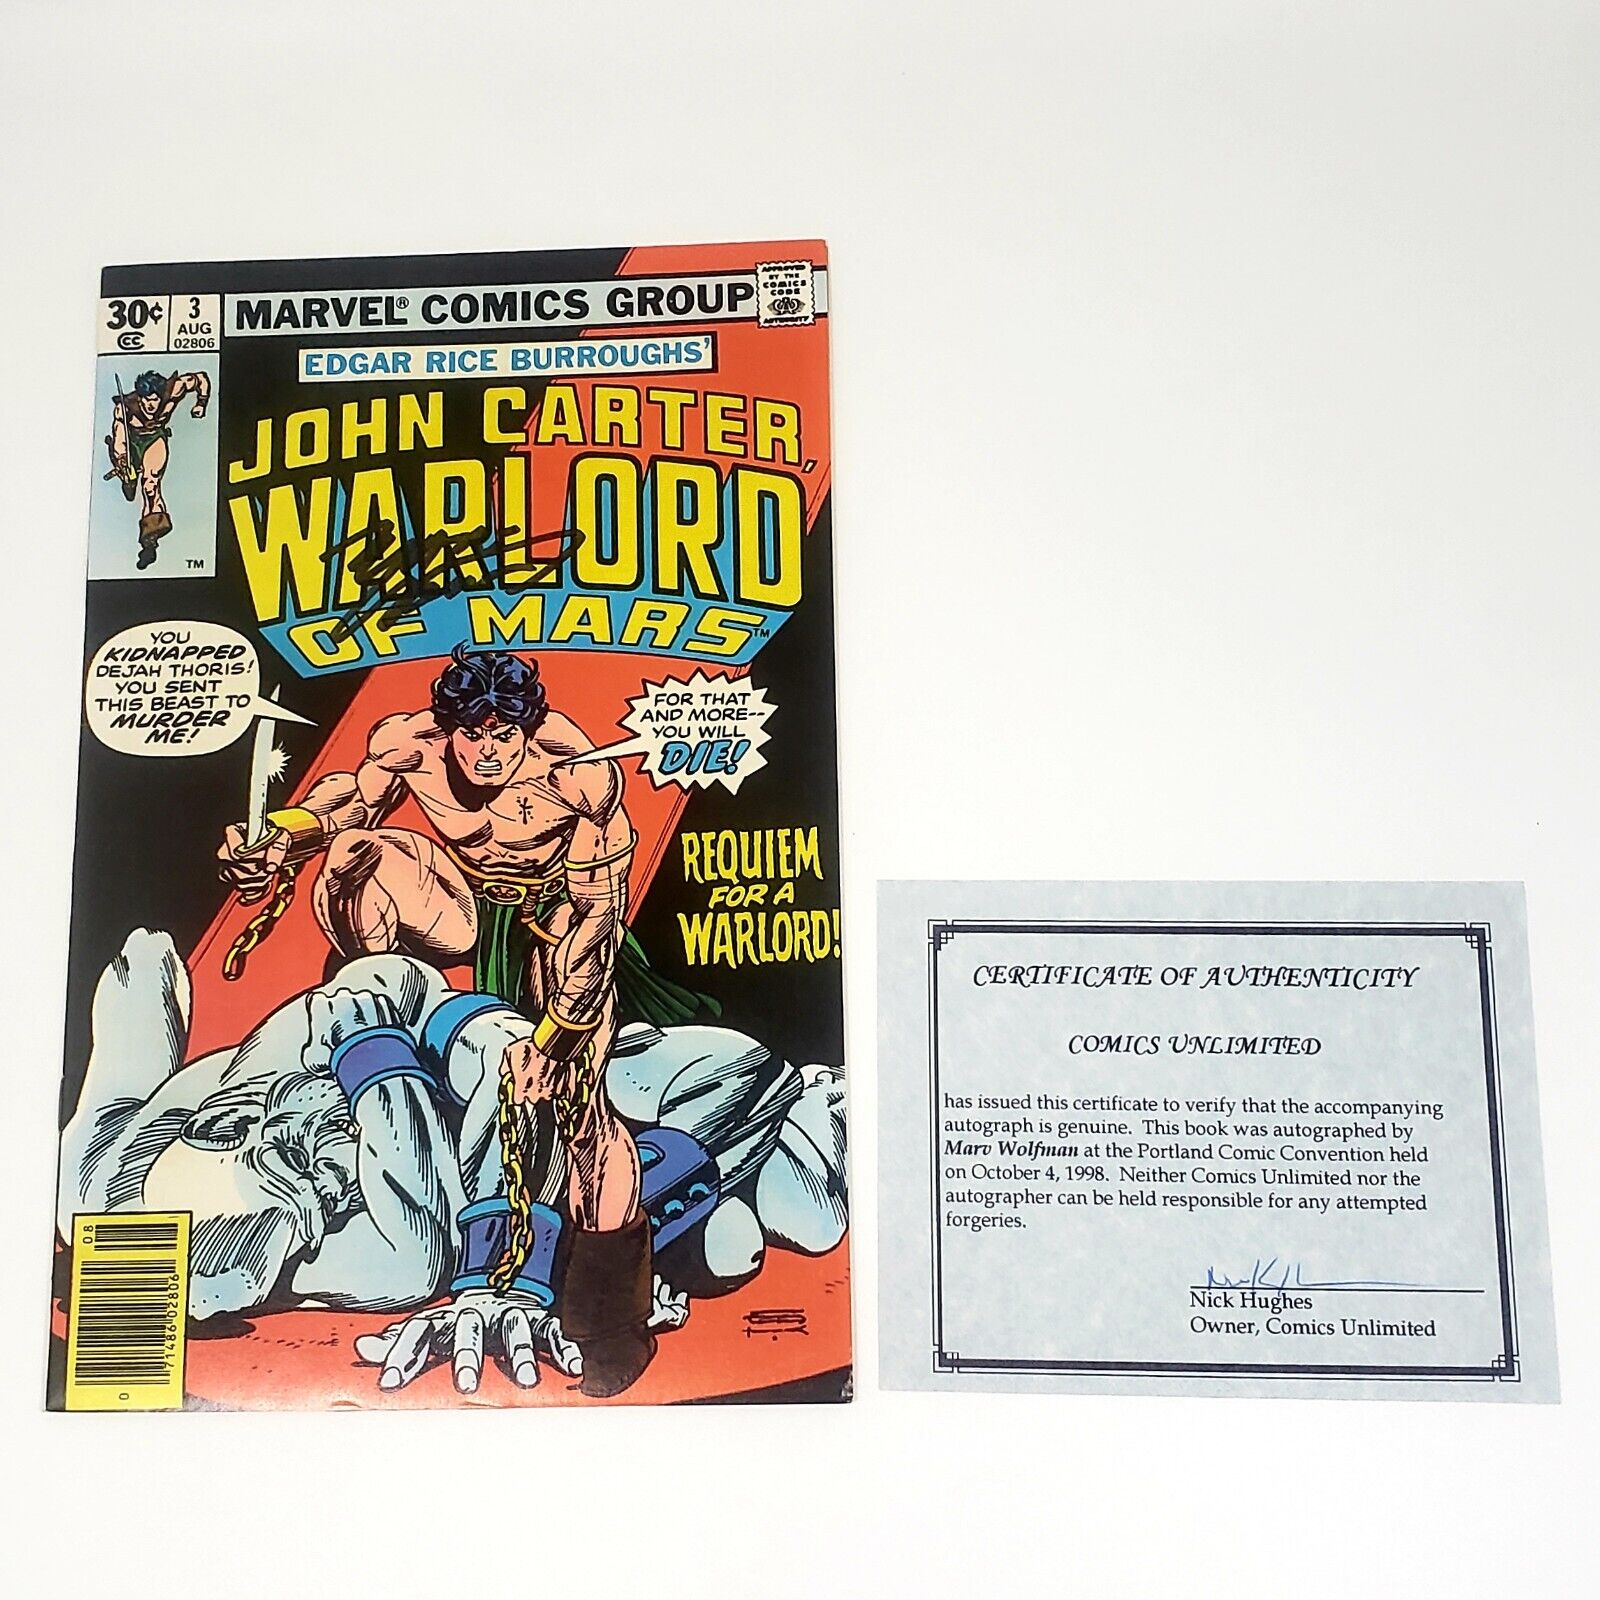 John Carter, Warlord of Mars #3 (1977) [Marvel Comics] (Signed)